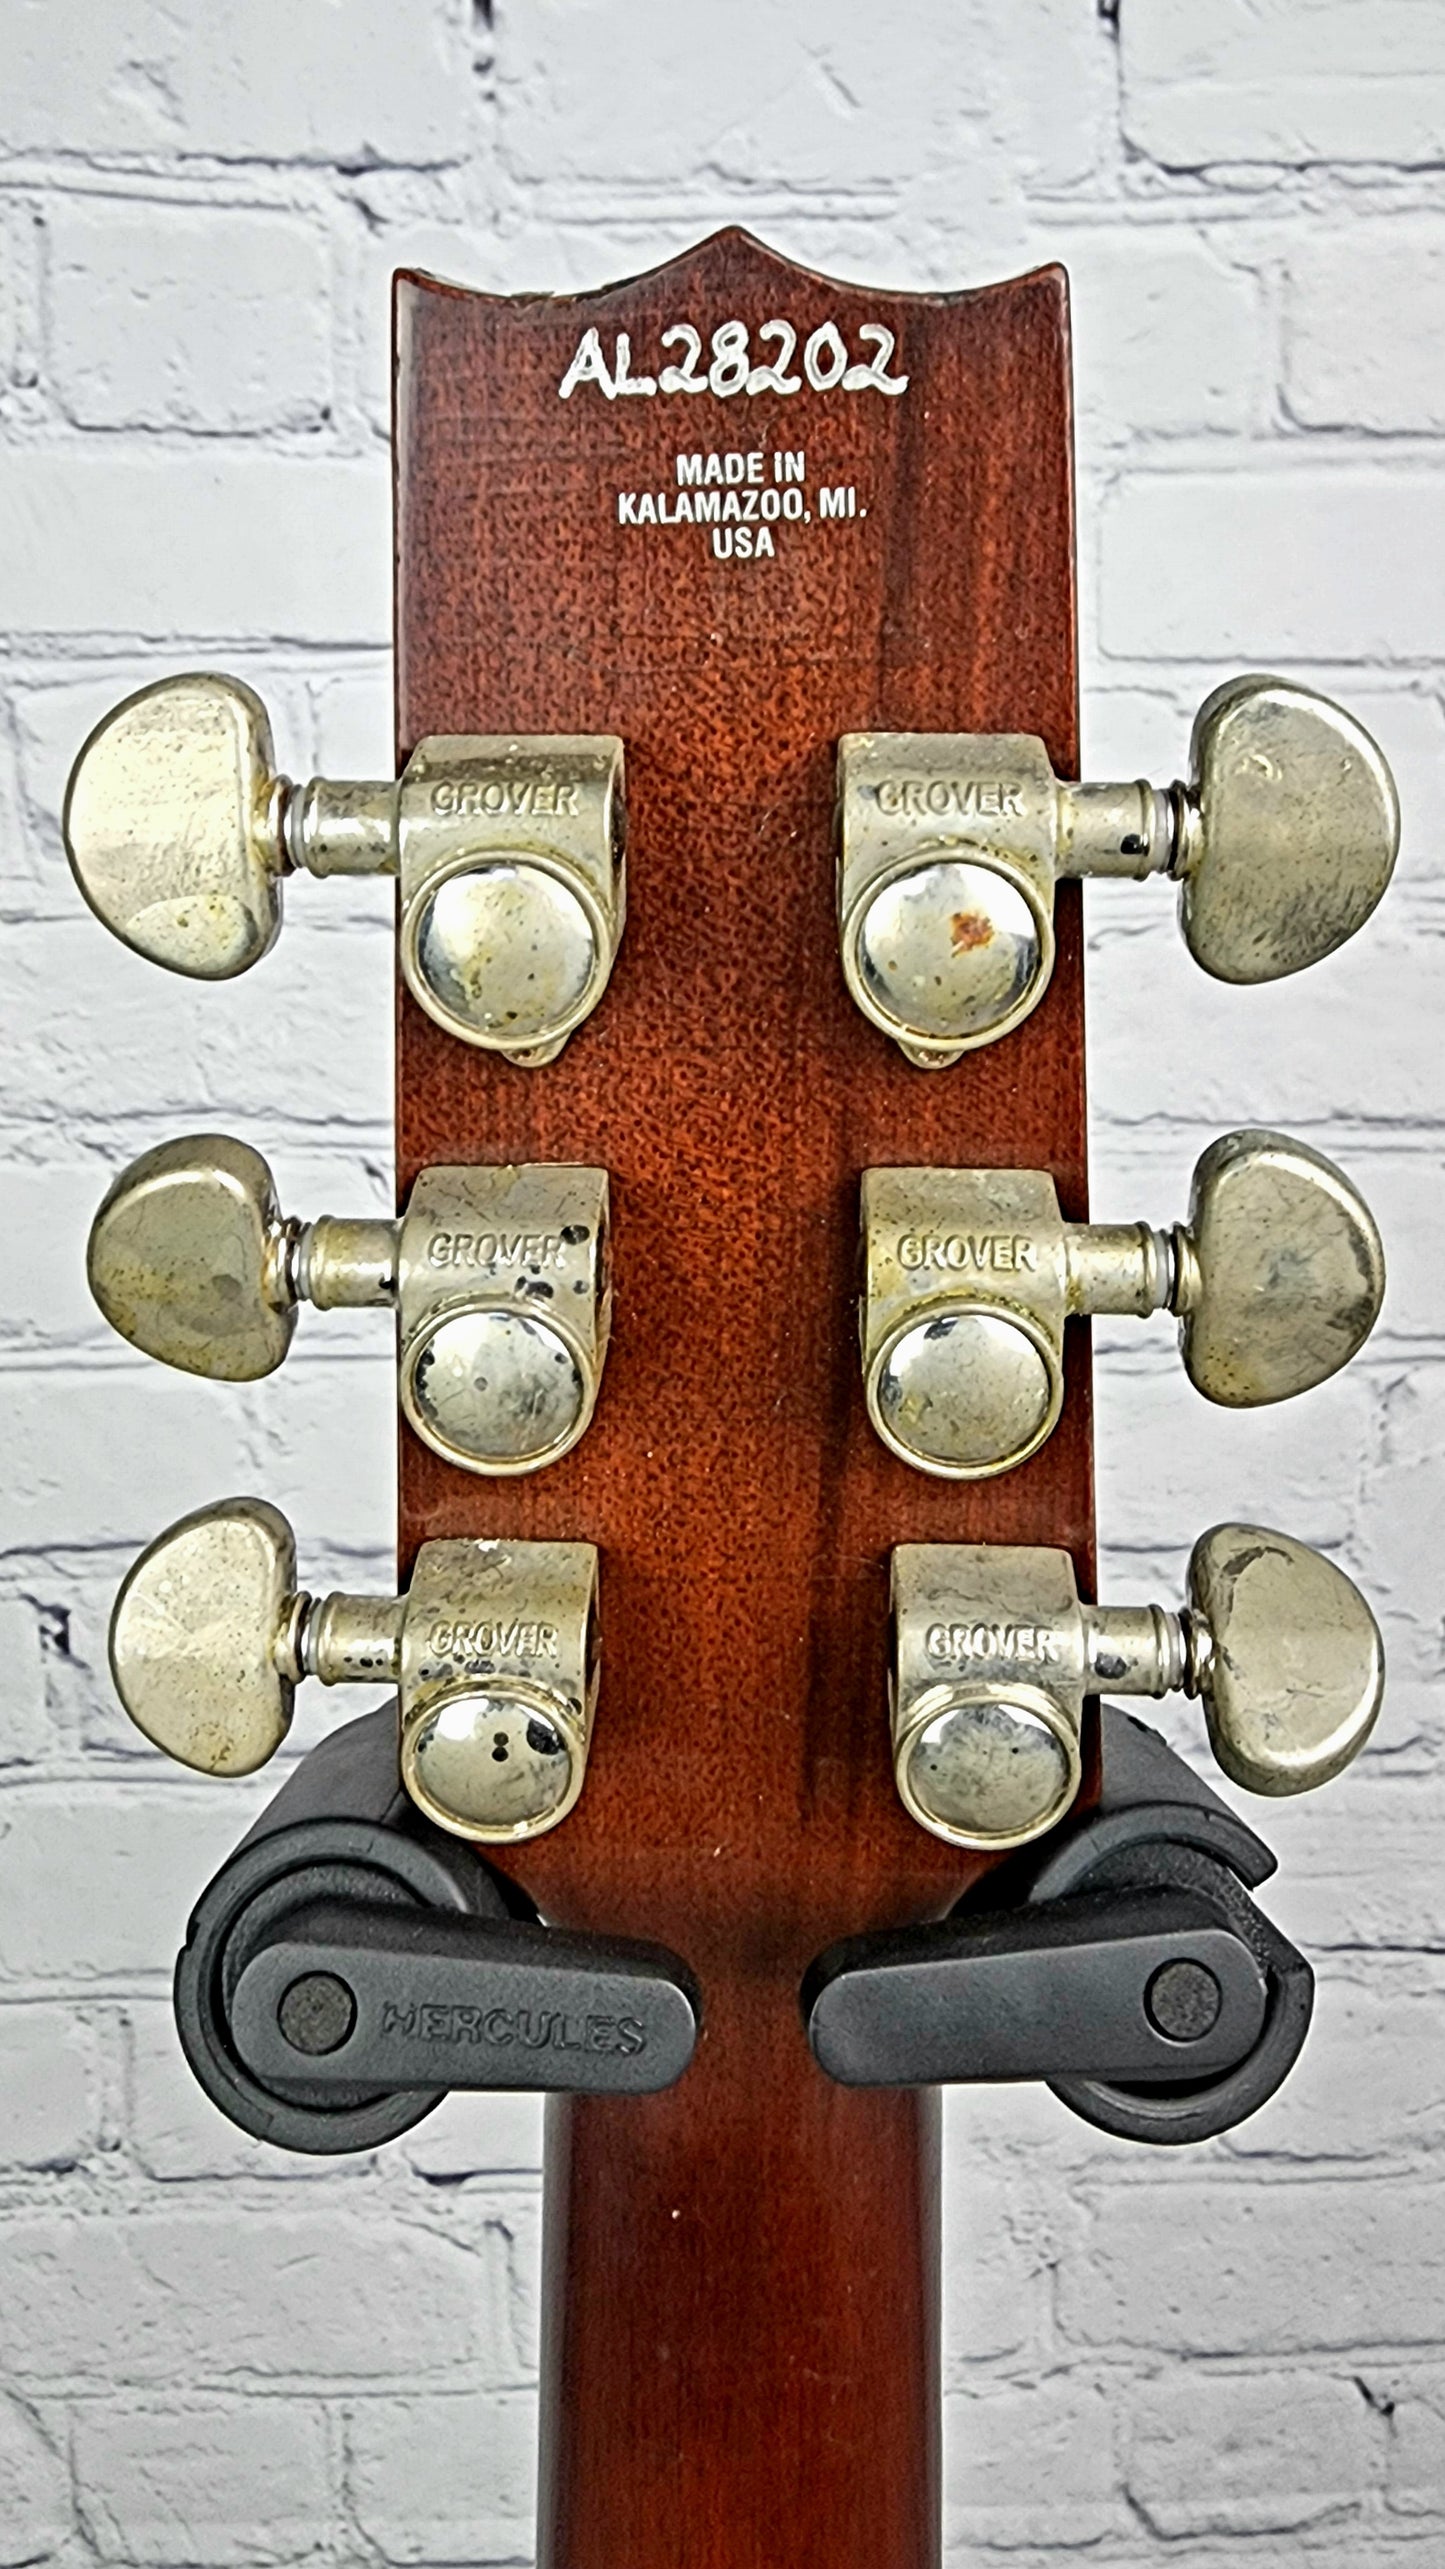 Heritage Guitars H-535 Artisan Aged Sunburst Semi-Hollow Electric Guitar